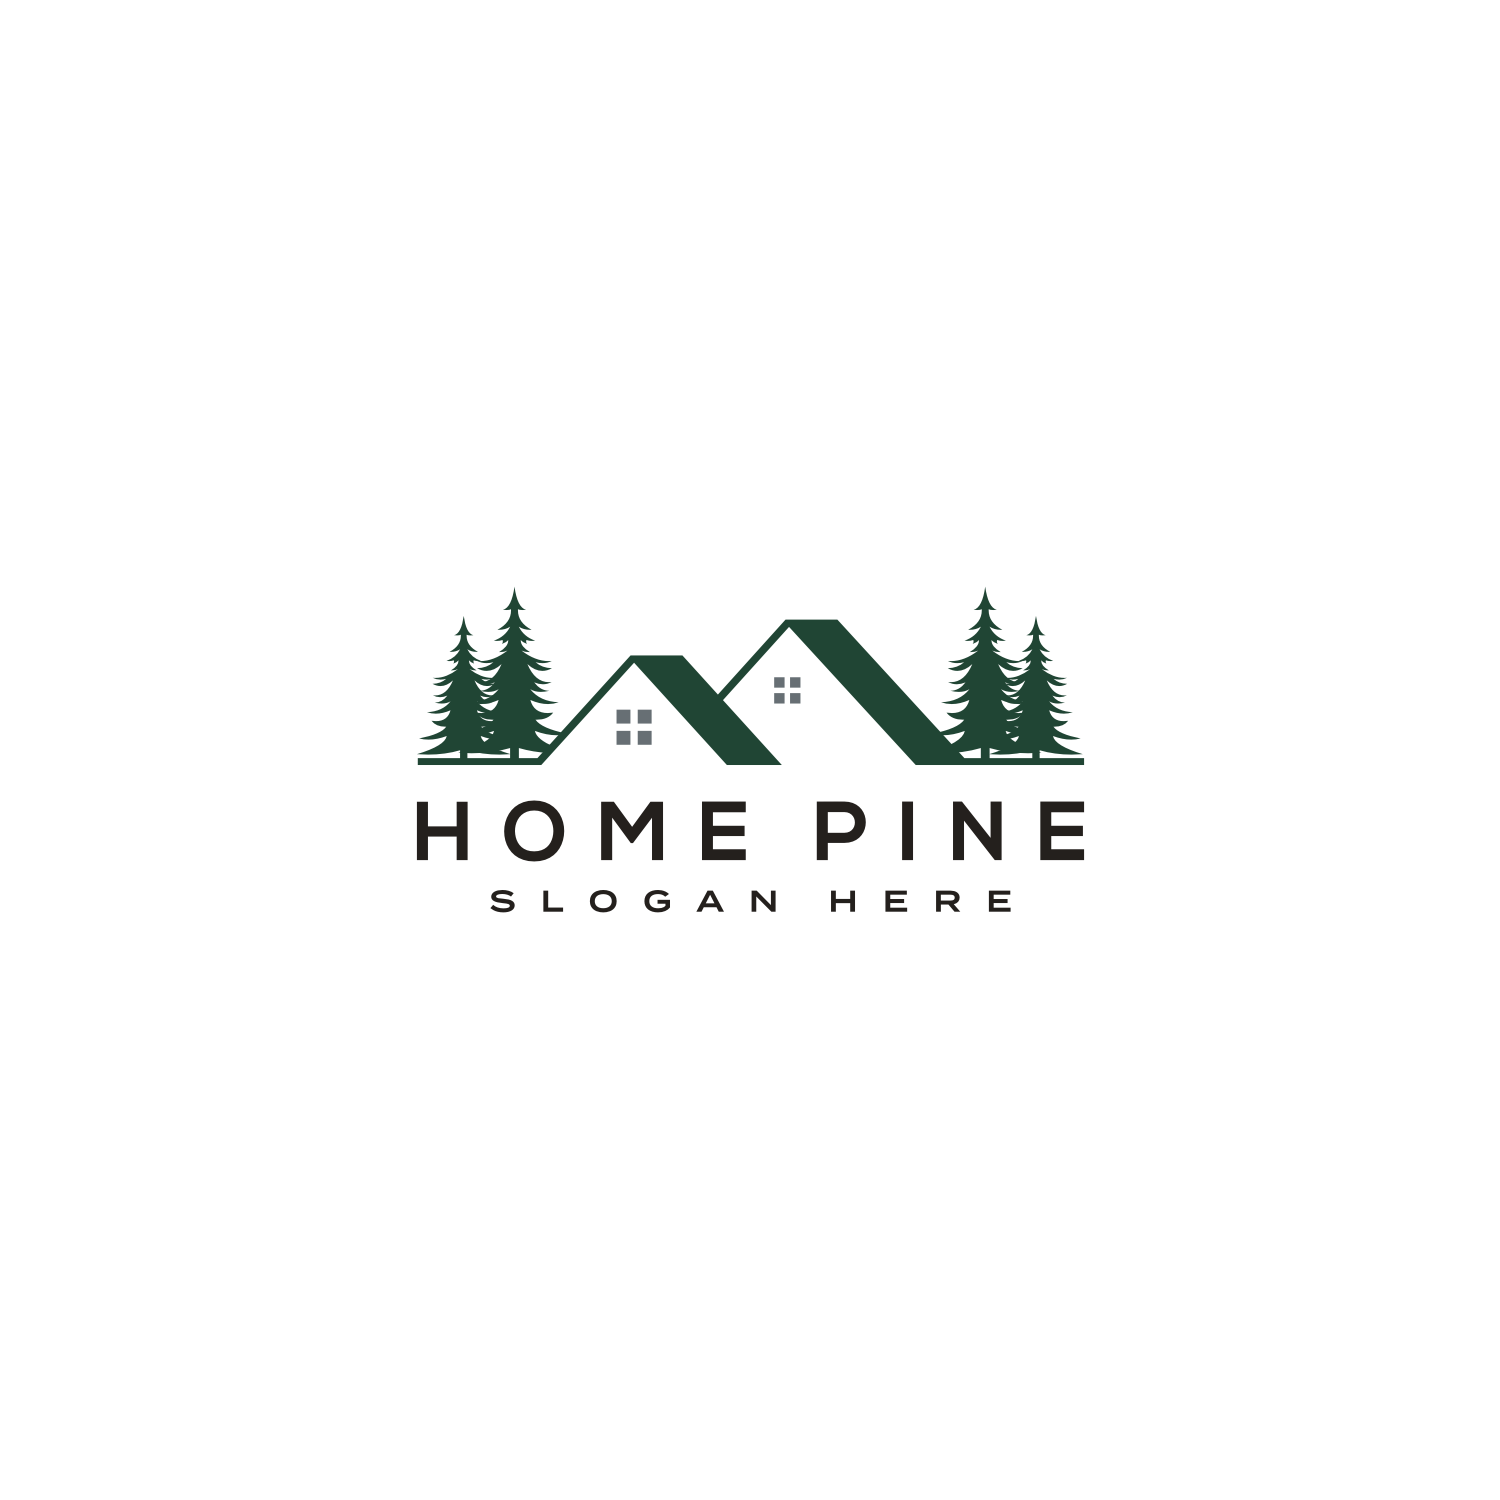 3.3 1Set of Home Pine Tree Logo Vector Design Template